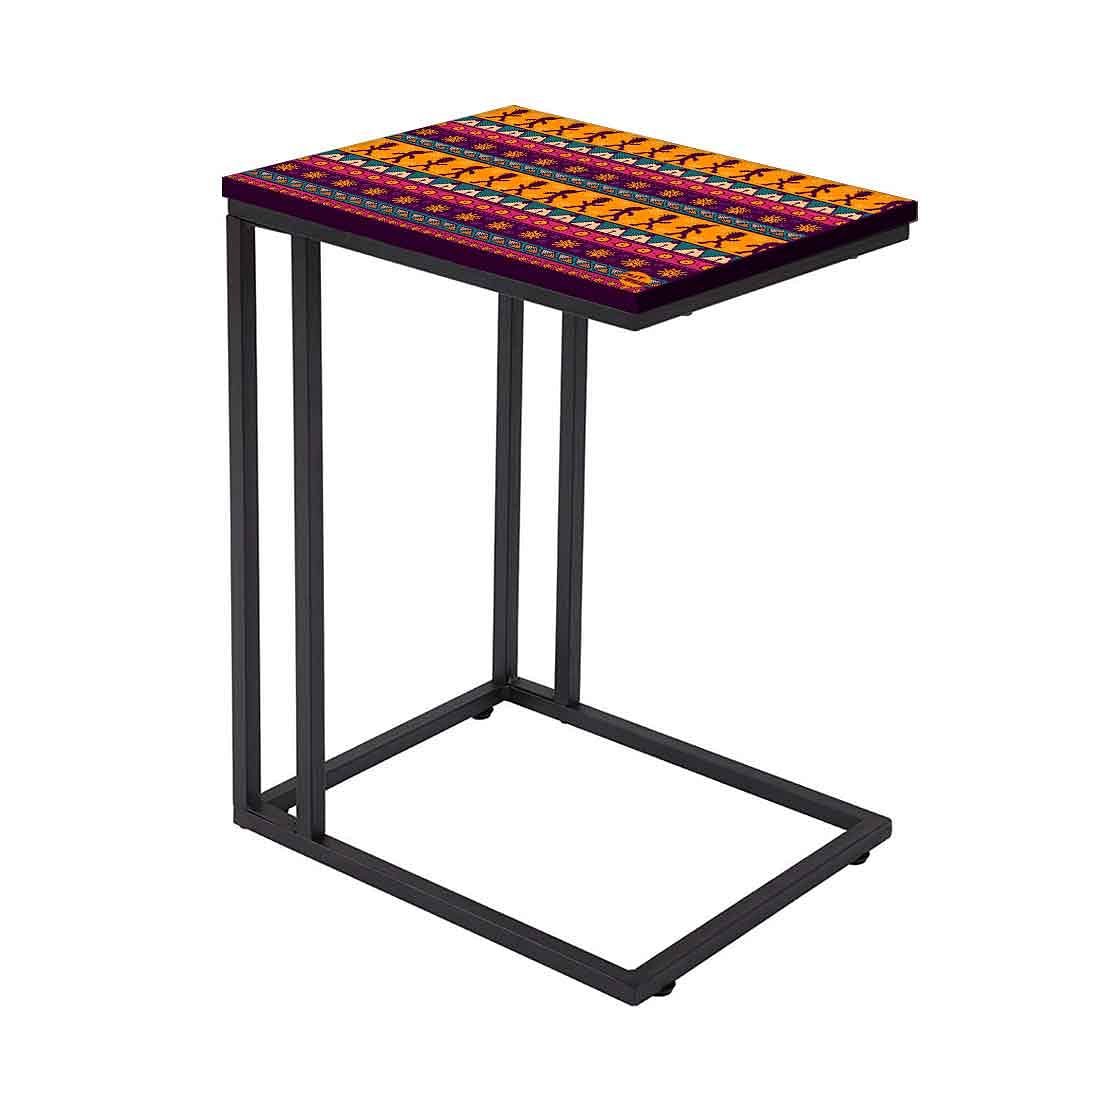 C Shaped Side Table For Sofa - Aztec Orange Brown Pattern Nutcase